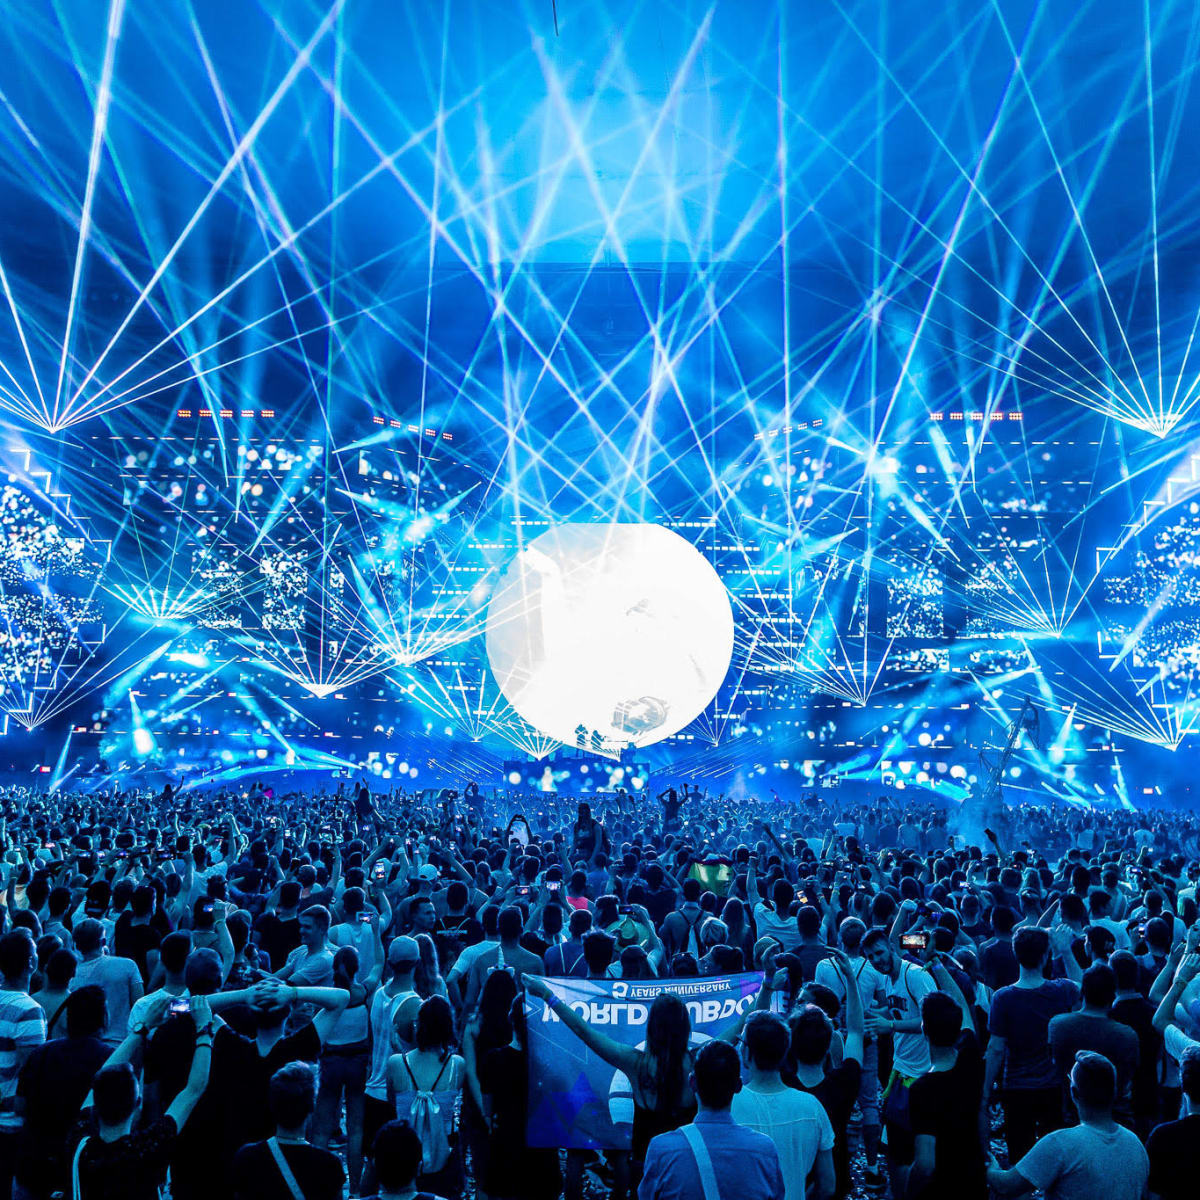 BigCityBeats to Host Corona Crisis Stadium Event  - The Latest  Electronic Dance Music News, Reviews & Artists